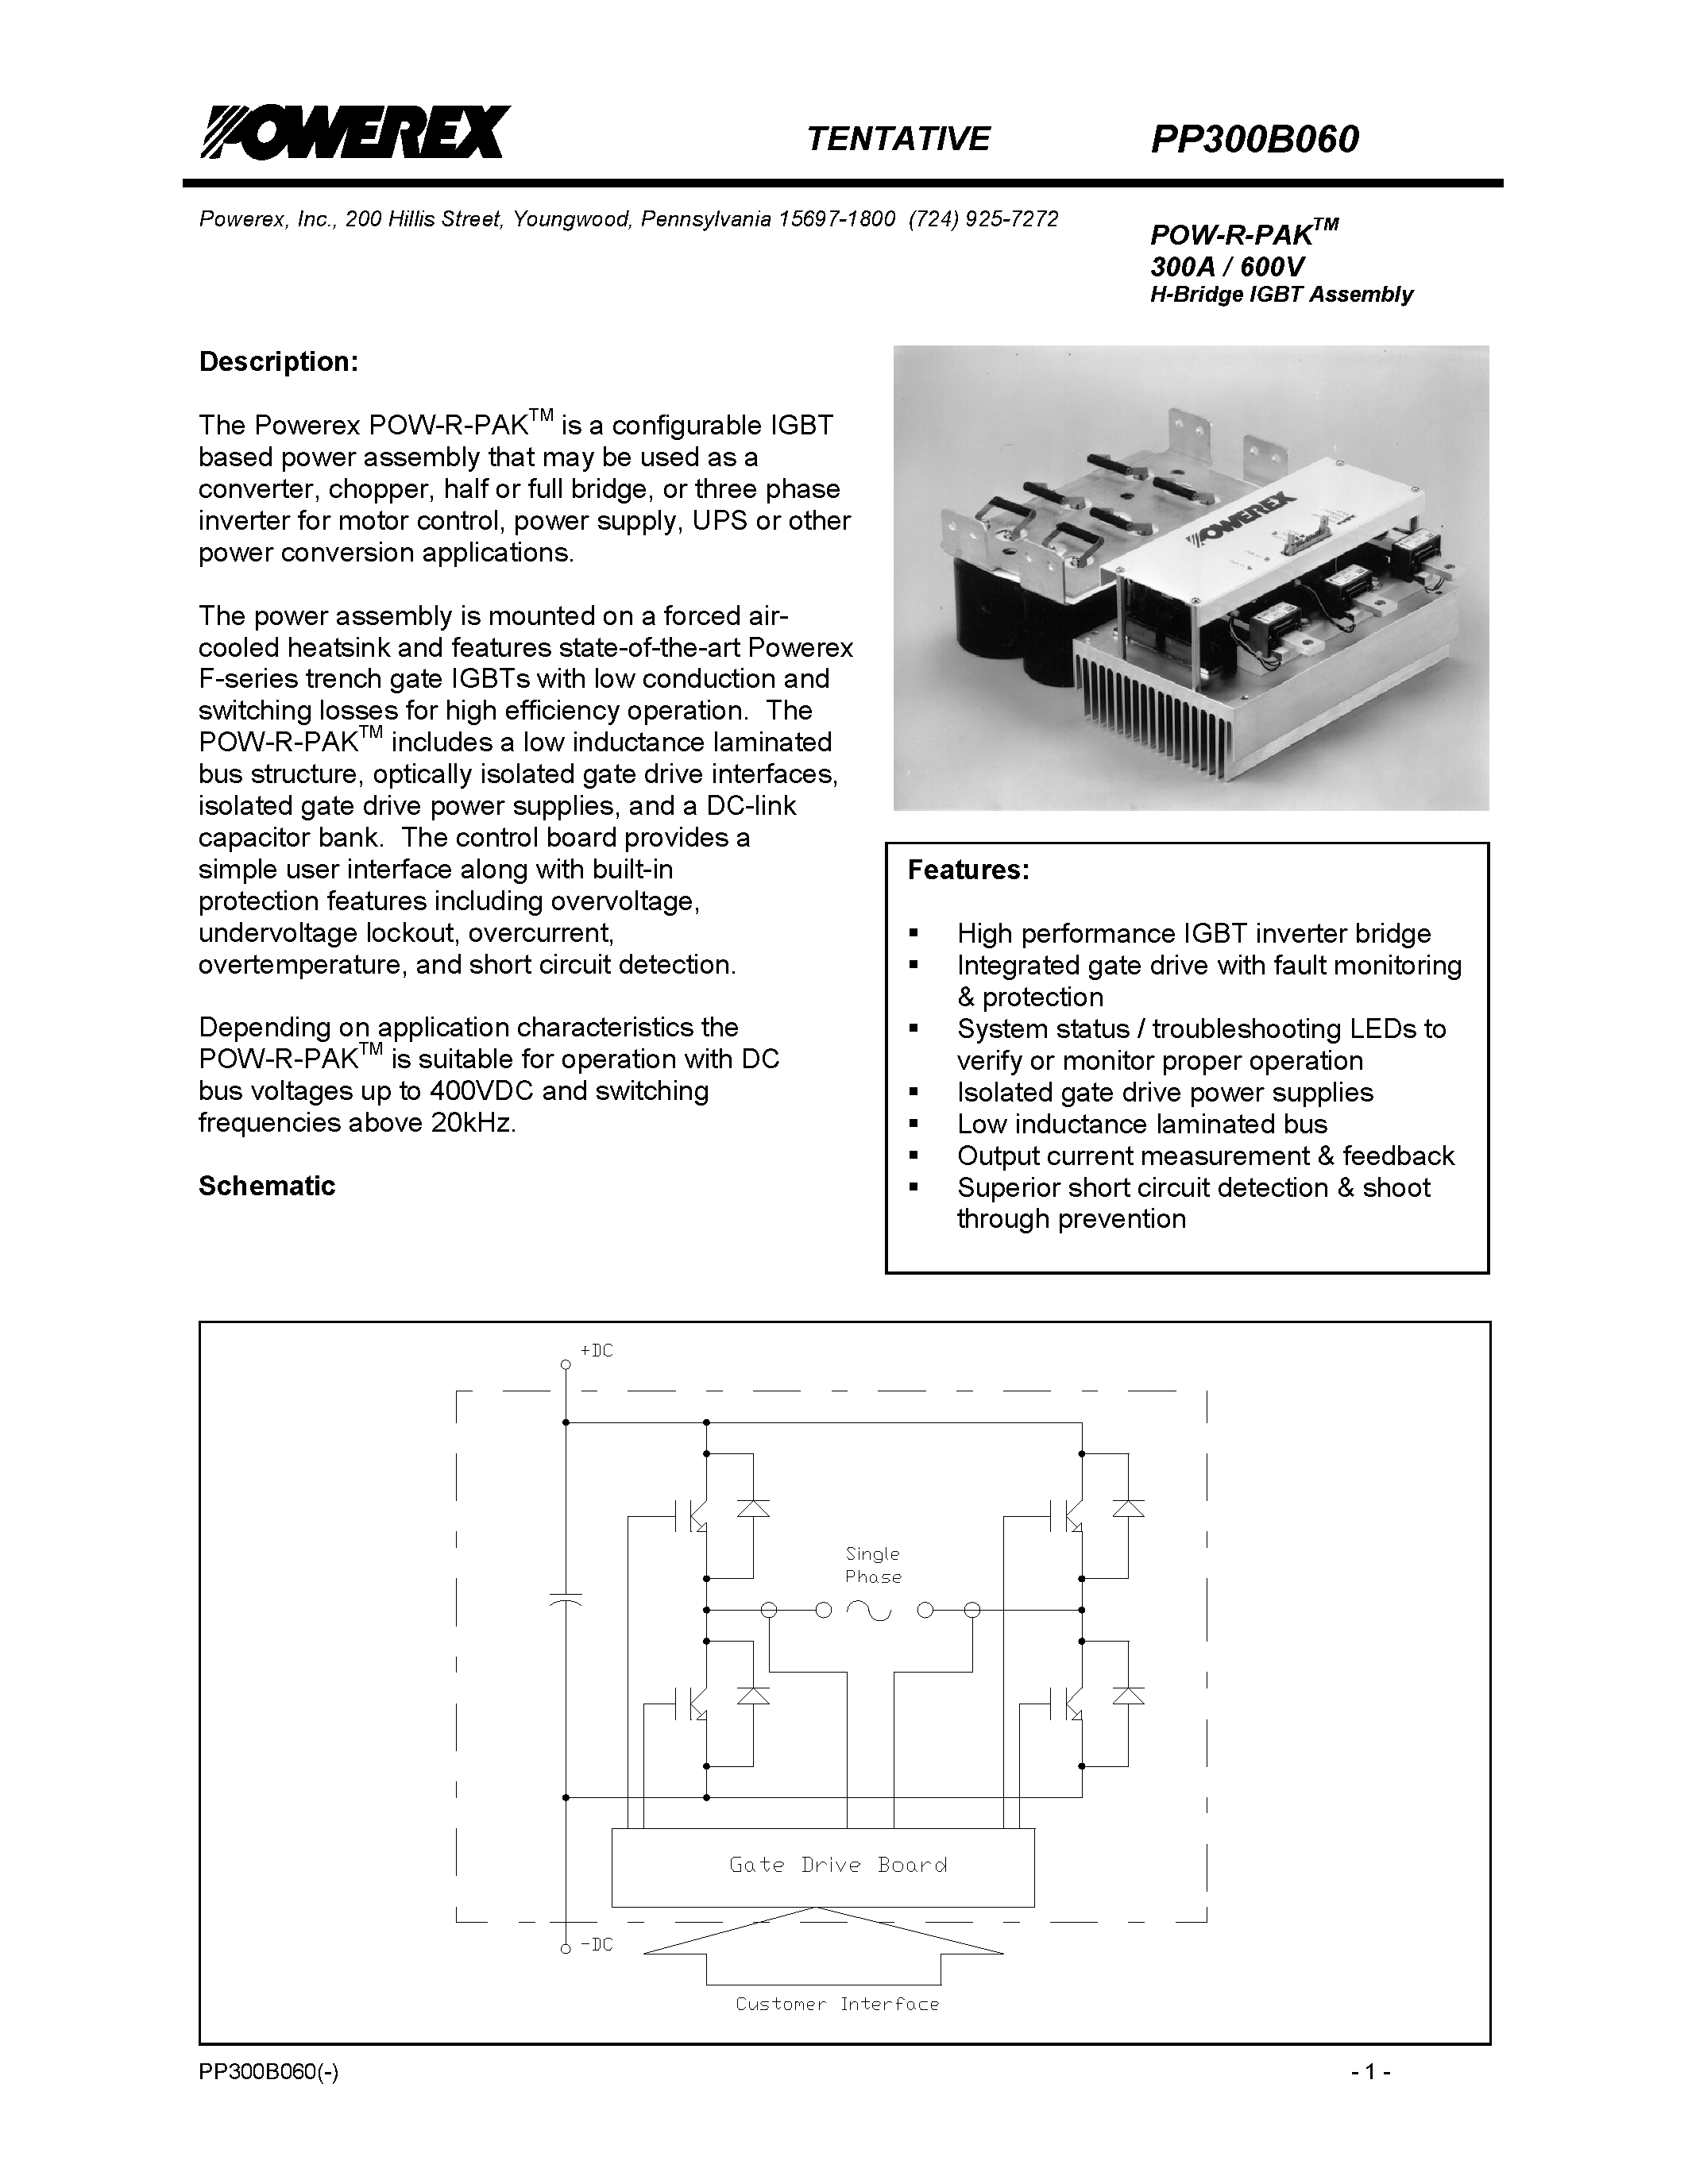 Datasheet PP300B060 - POW-R-PAK 300A / 600V H-Bridge IGBT Assembly page 1